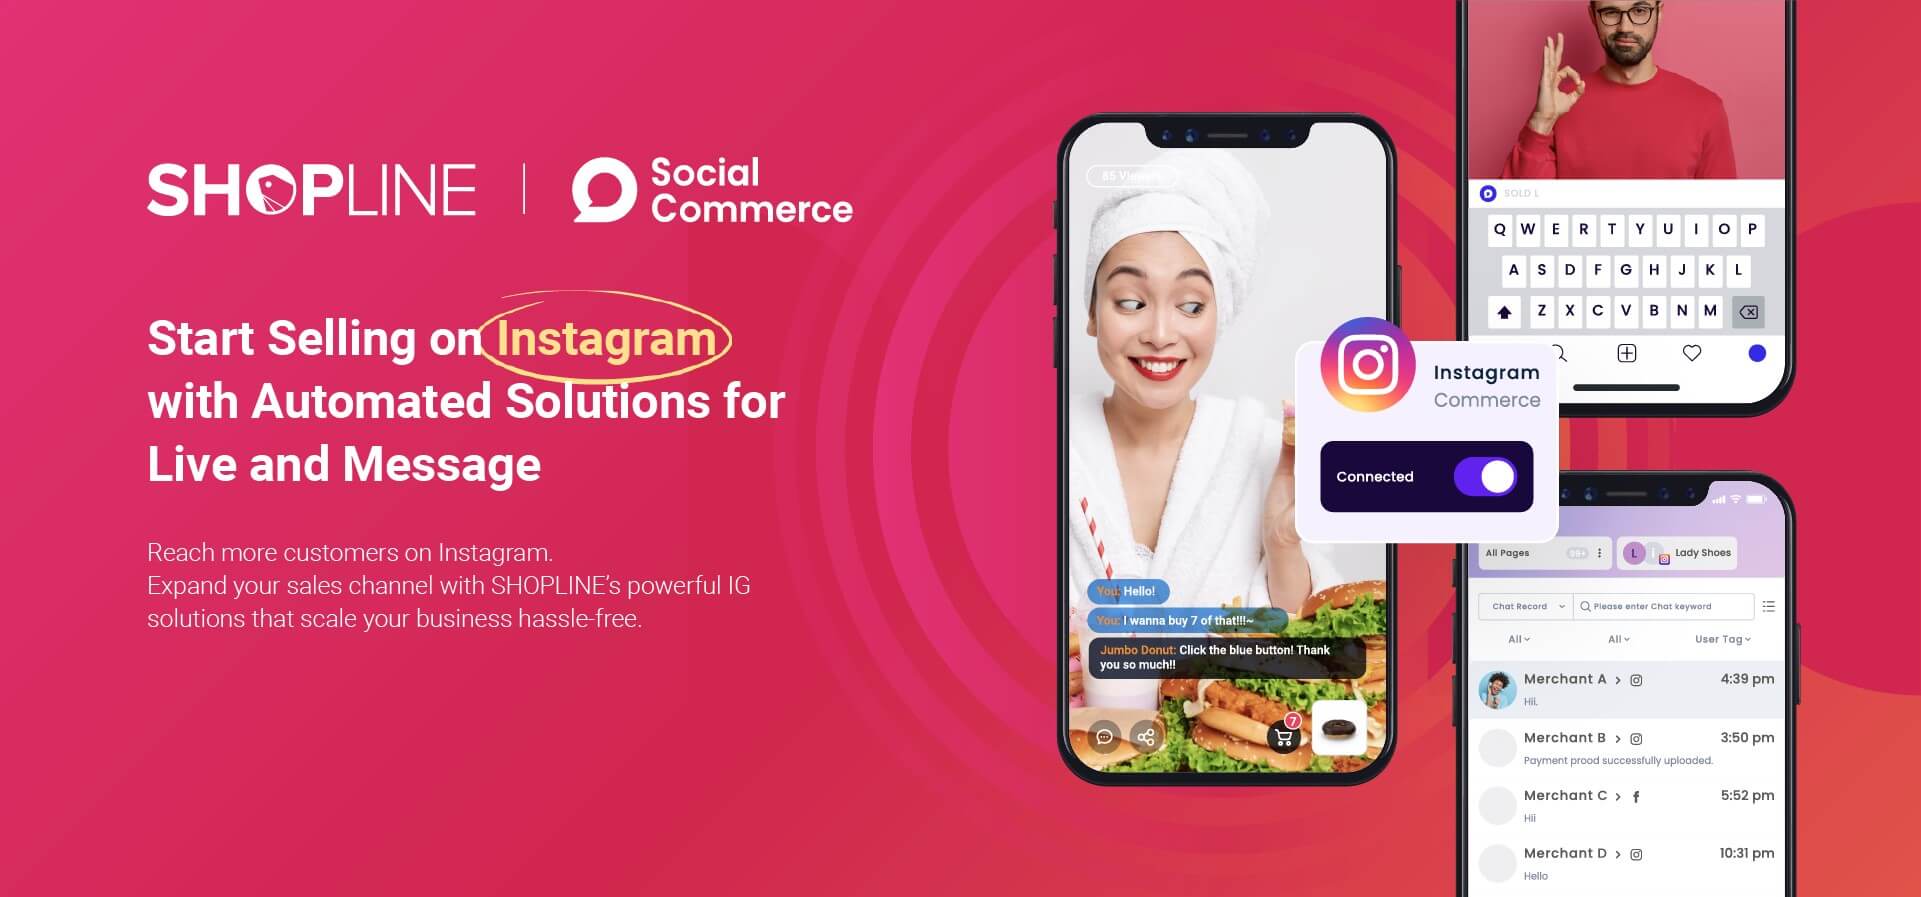 ecommerce platform shopline social commerce